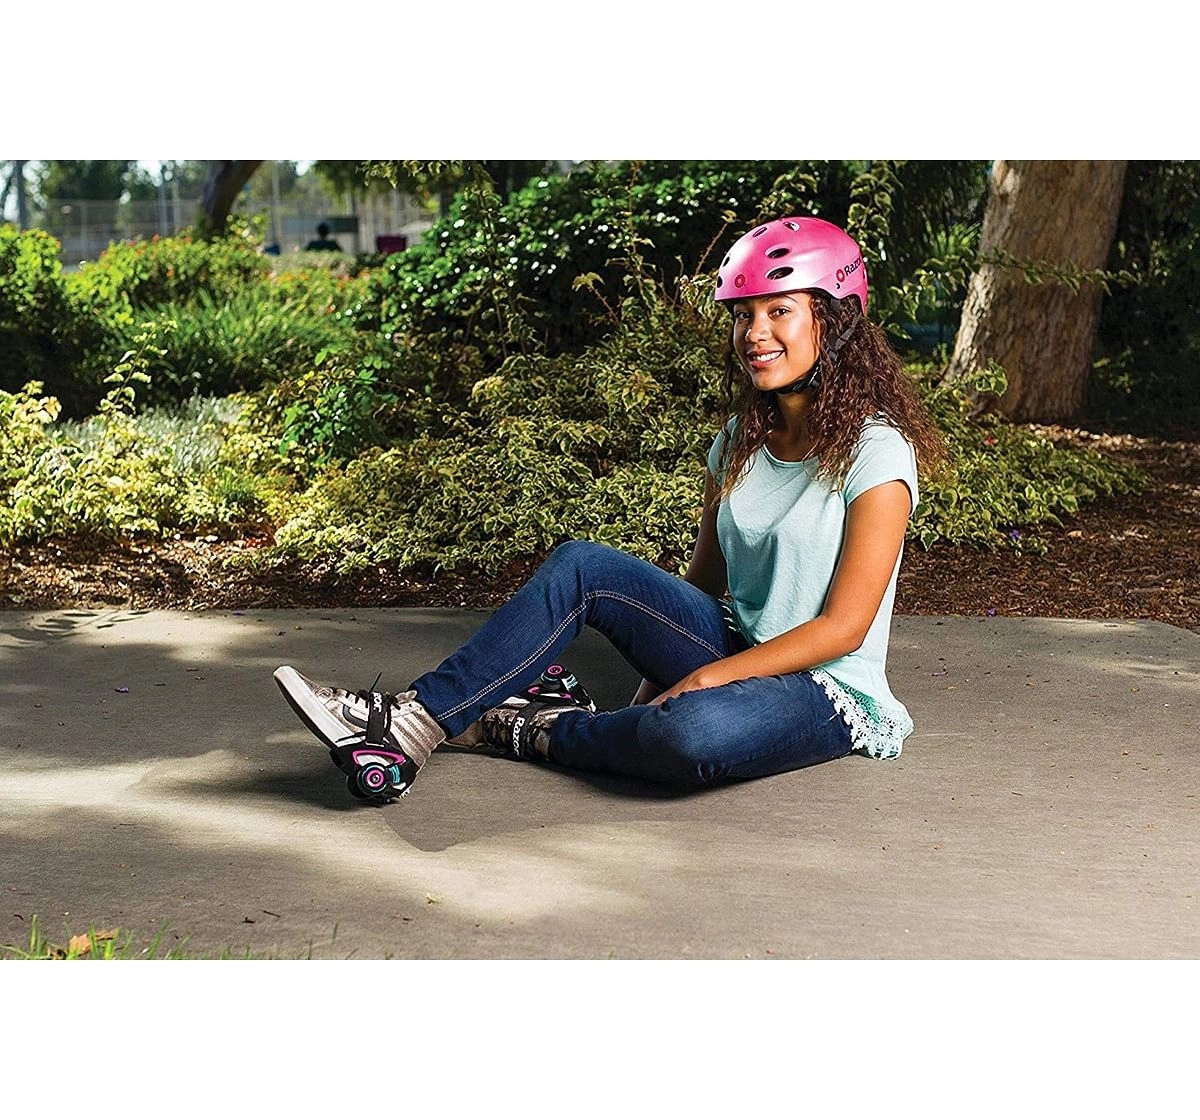 Razor 25056150 Jetts Heel Wheels, One Size (Purple) Skates and Skateboards for Kids age 8Y+ (Purple)